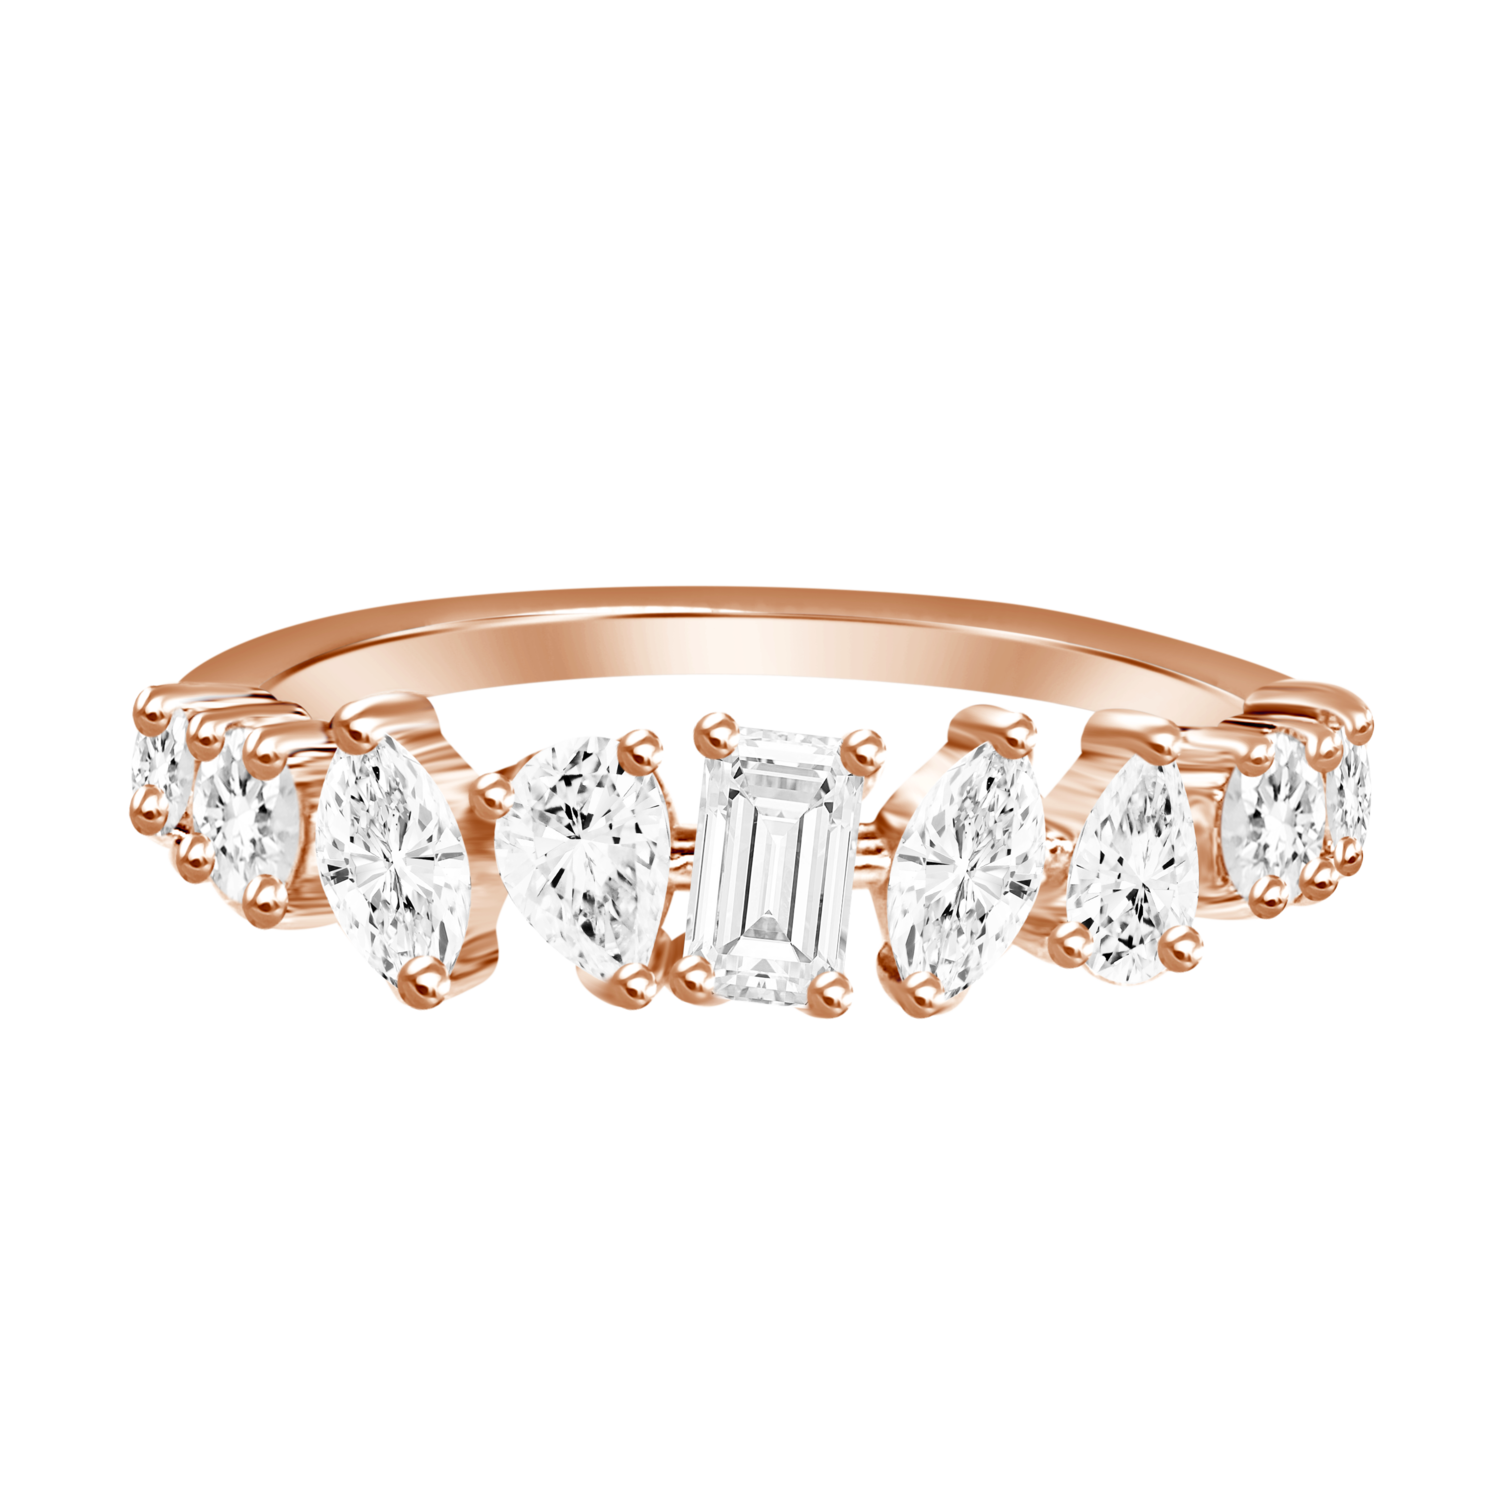 18K Rose Gold  Mixed Shape Diamond  Band Ring